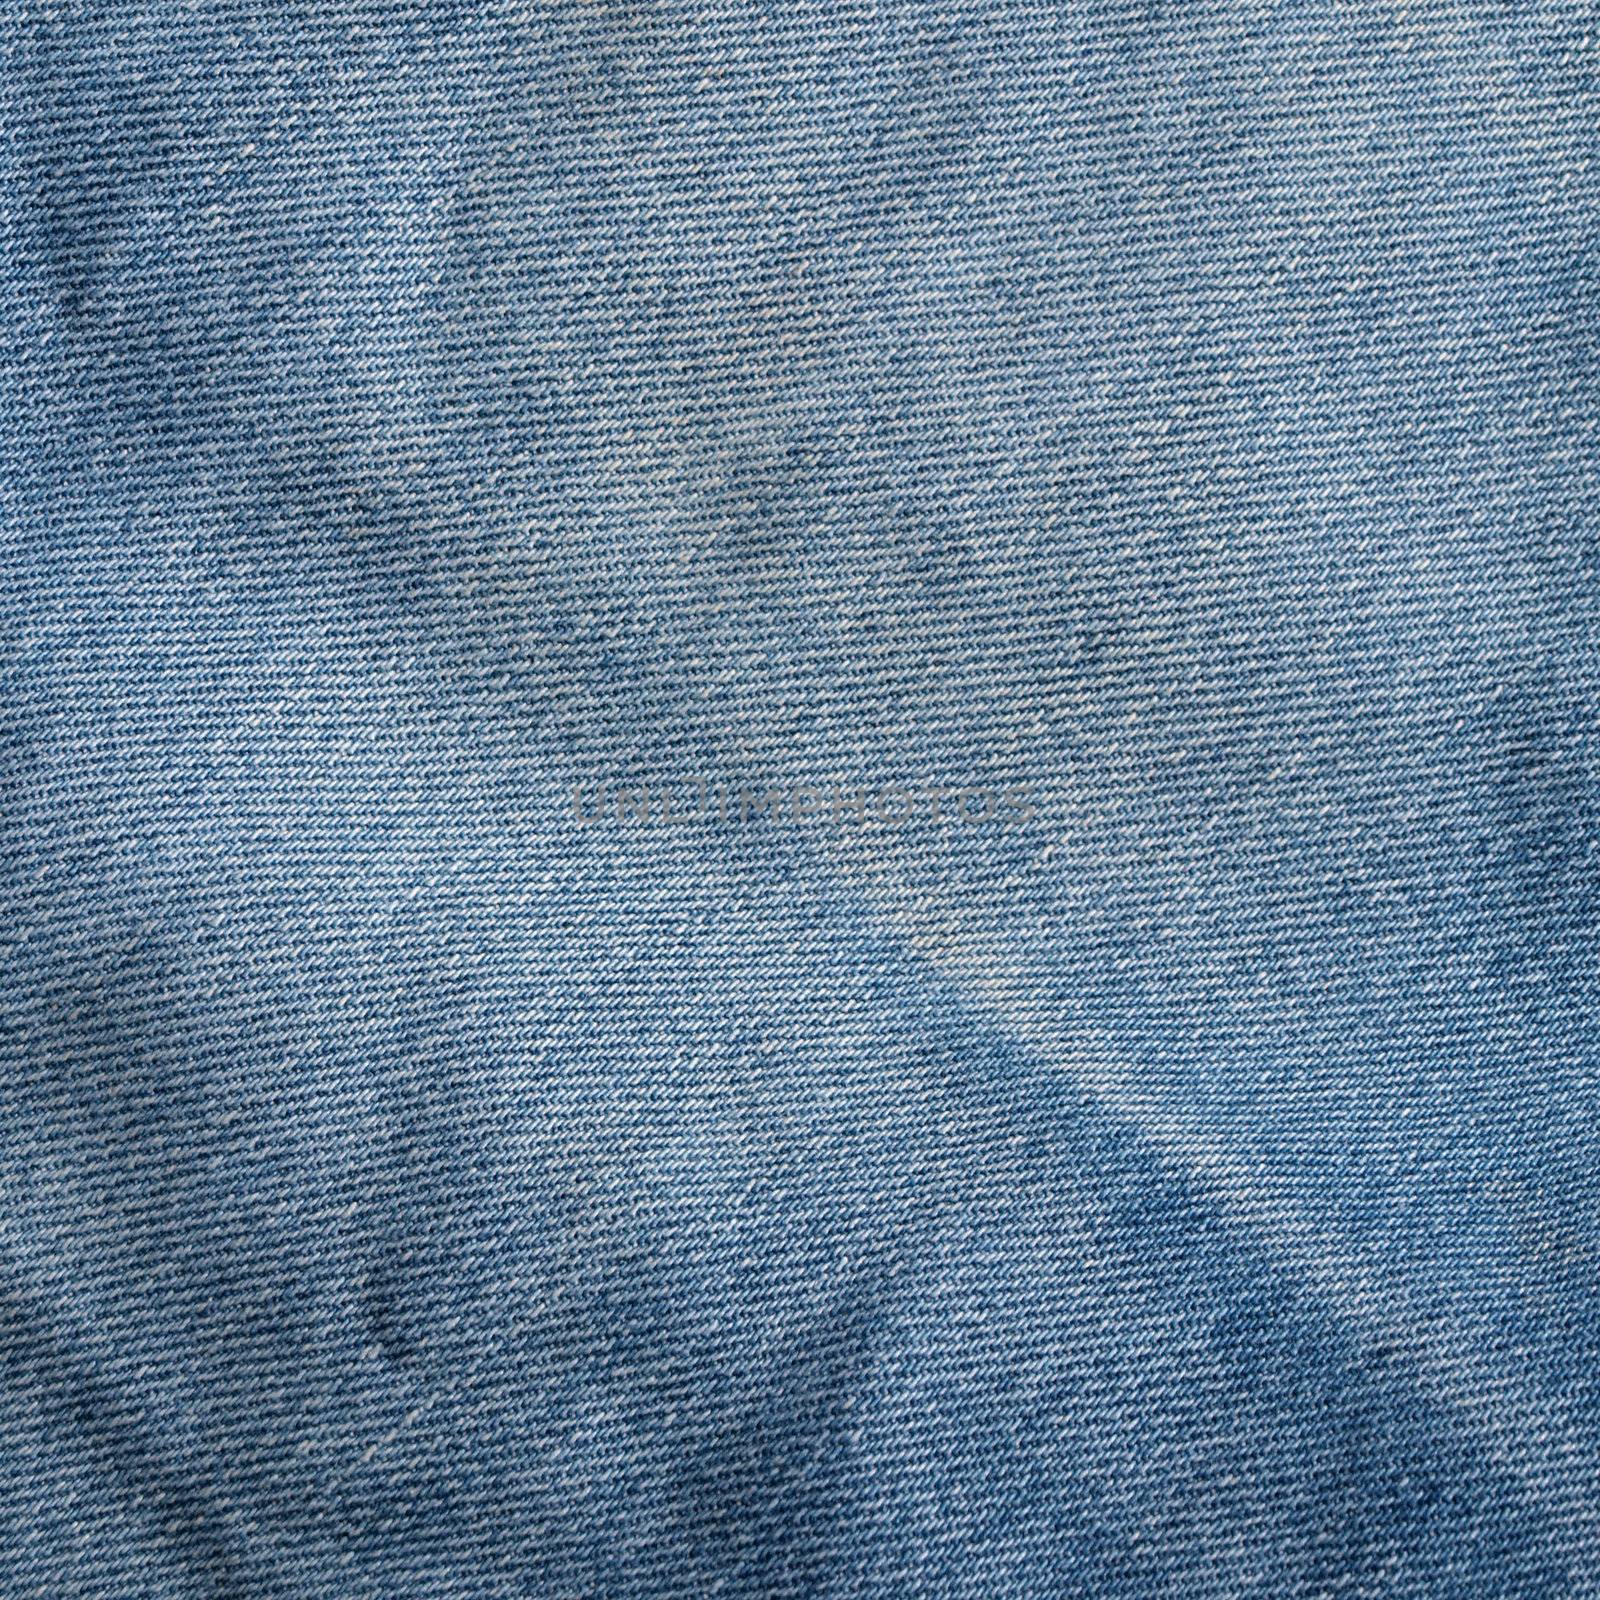 blue denim jeans texture, background by jakgree